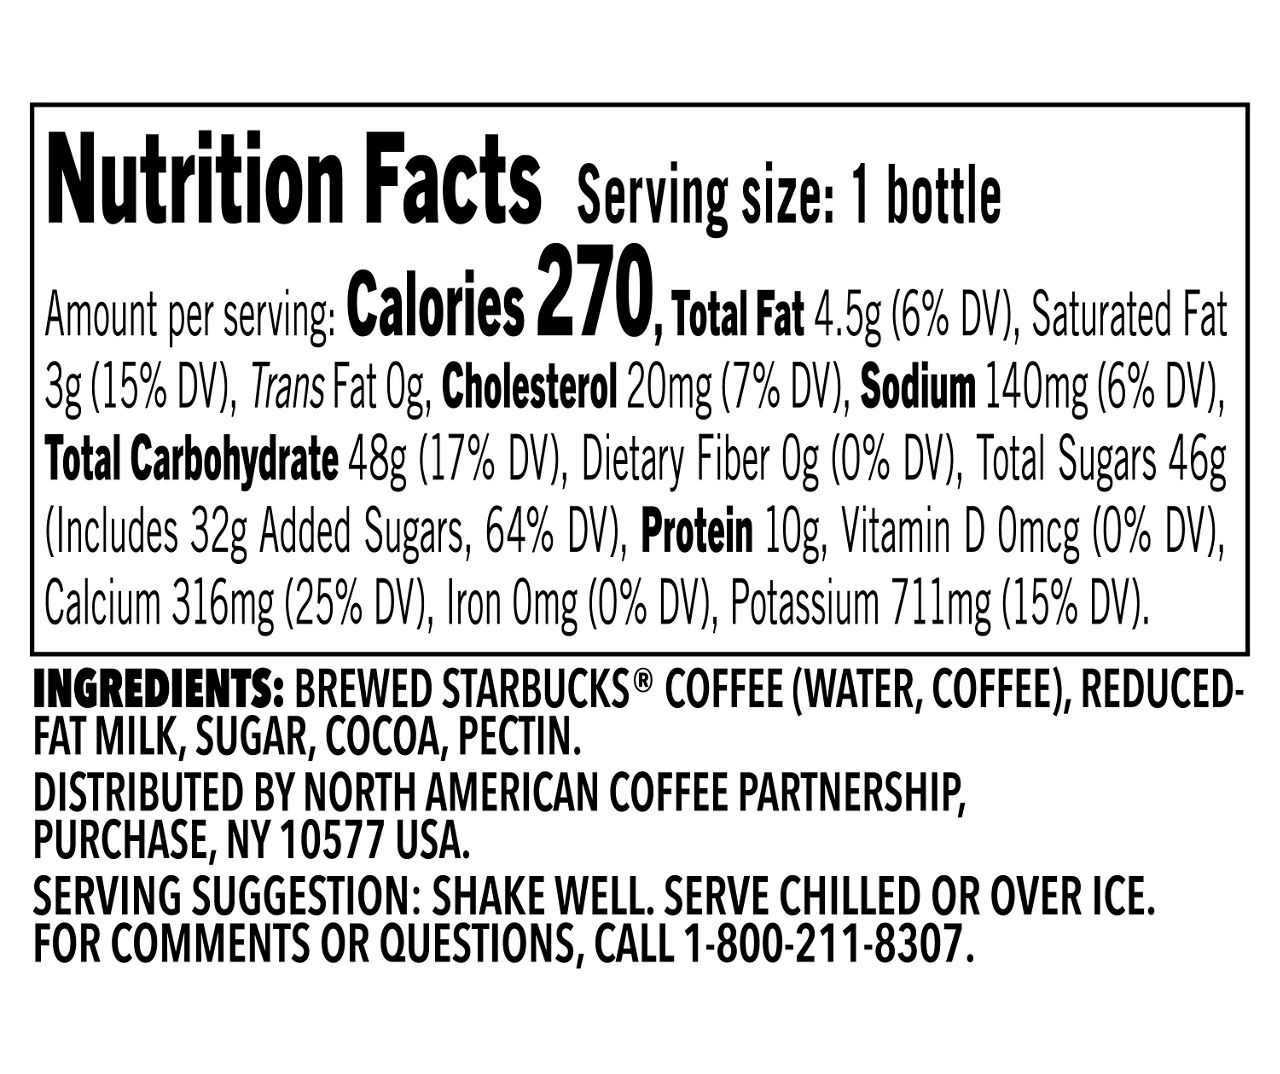 Starbucks Frappuccino Chilled Coffee Drink - 13.7 fl oz Glass Bottle